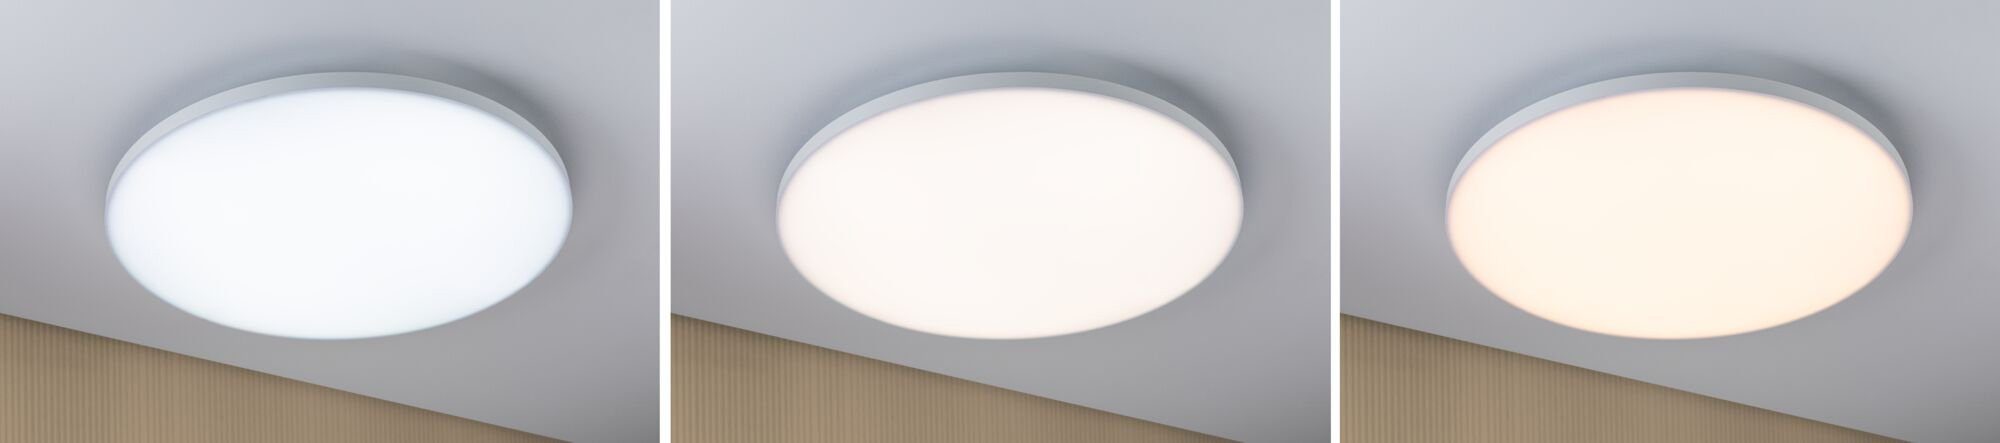 Paulmann LED Panel Velora, LED fest integriert, Tageslichtweiß,  Gleichmäßiges Raumlicht auf Basis modernster LED-Technik